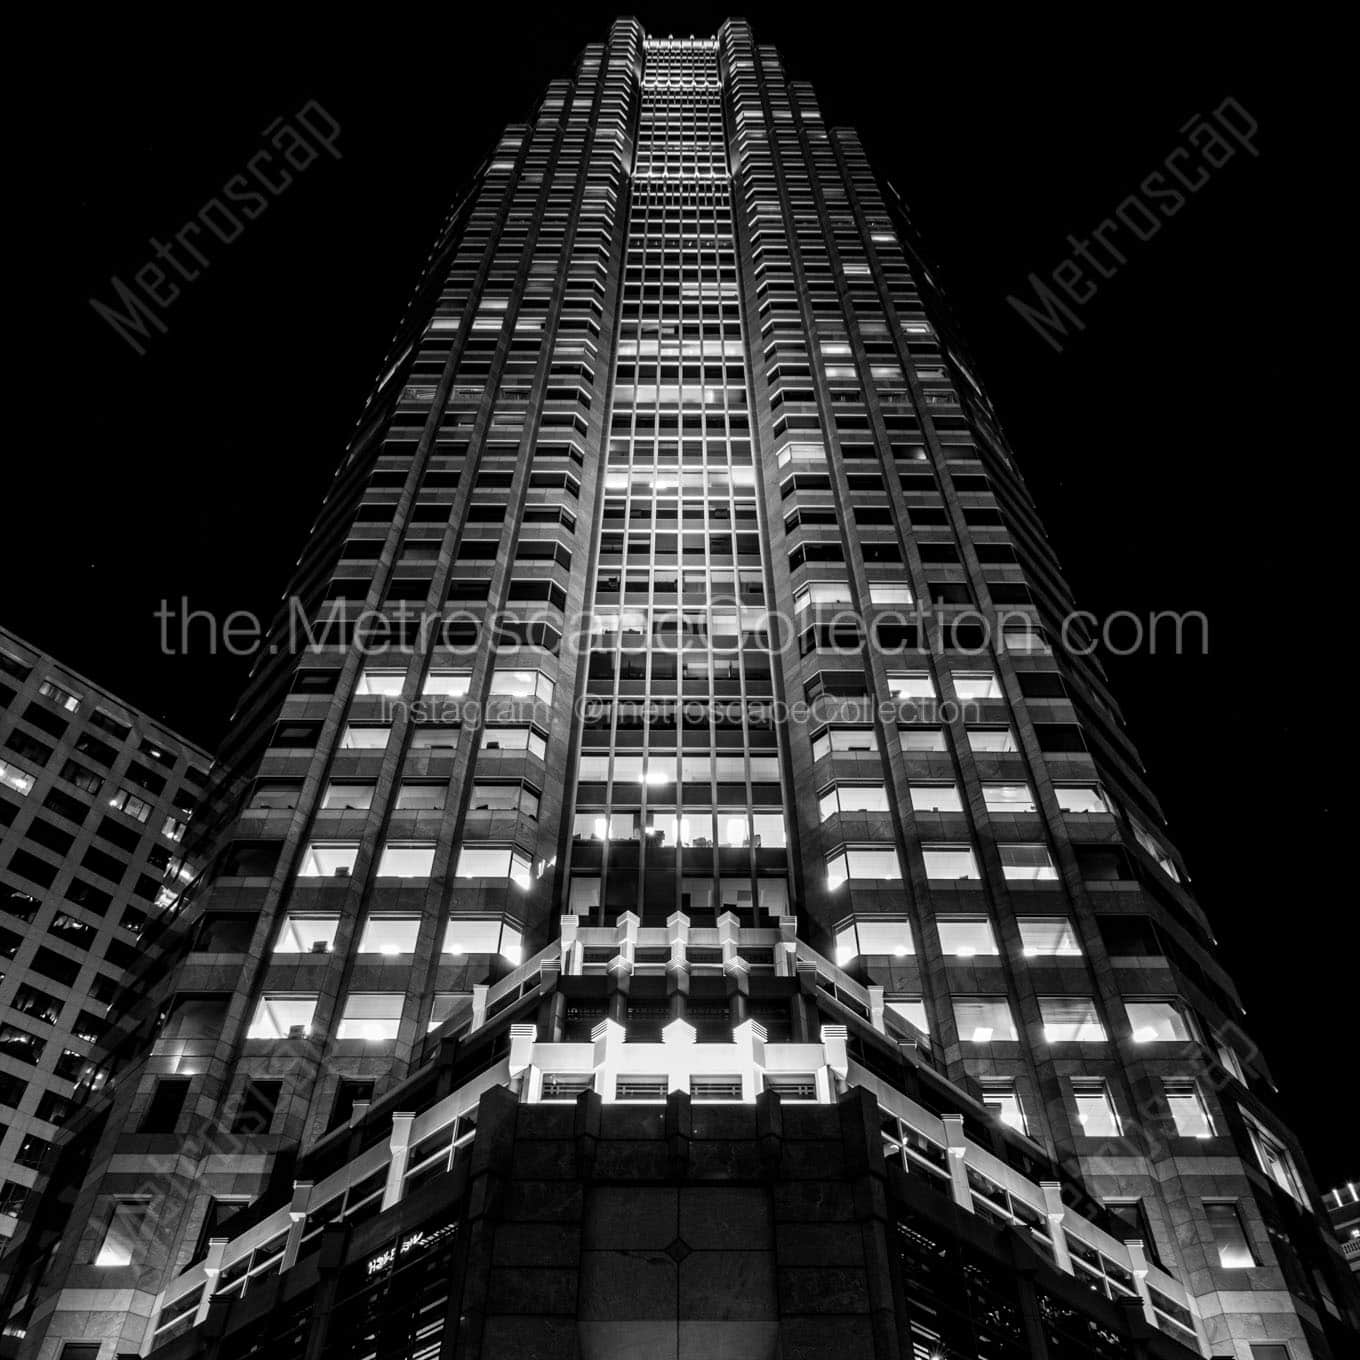 pwc building at night Black & White Office Art